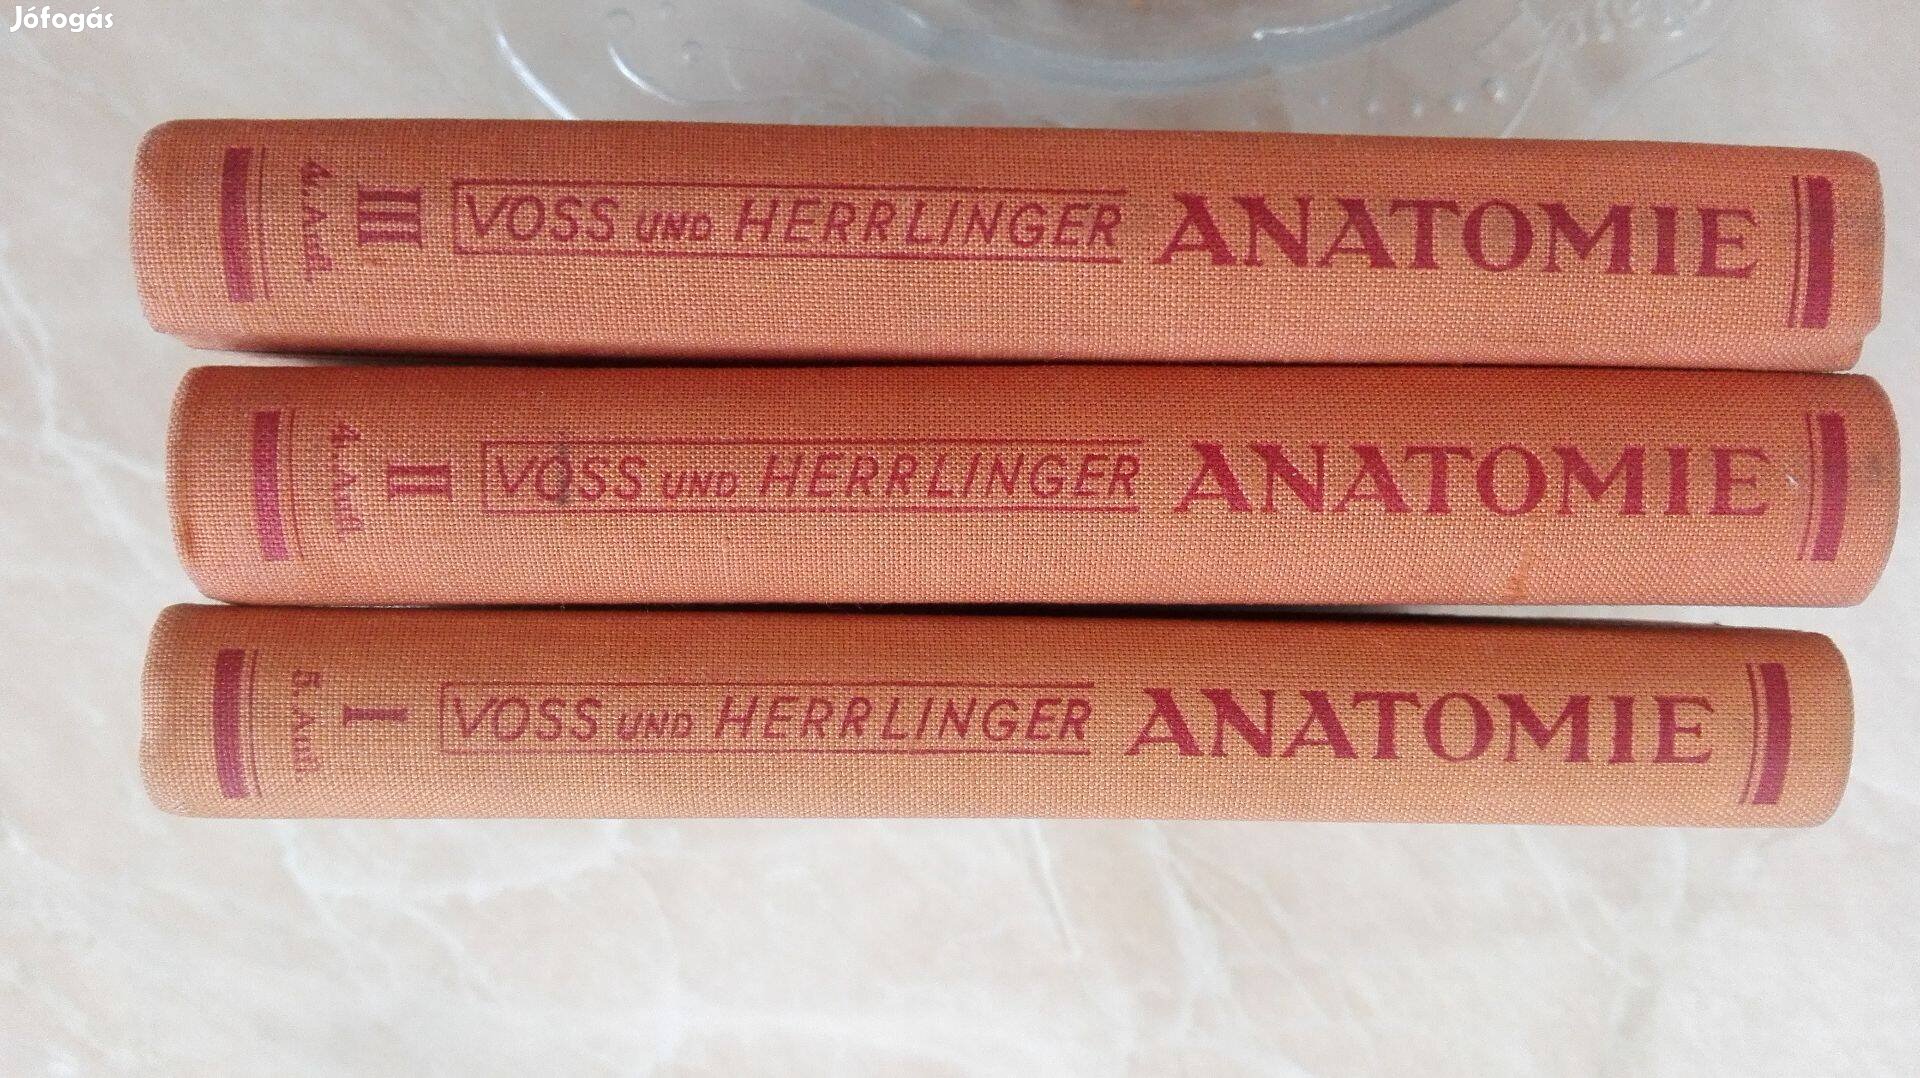 Ritka Német Orvosi szakkönyv Voss und Herrlinger Anatomie I-III 1953